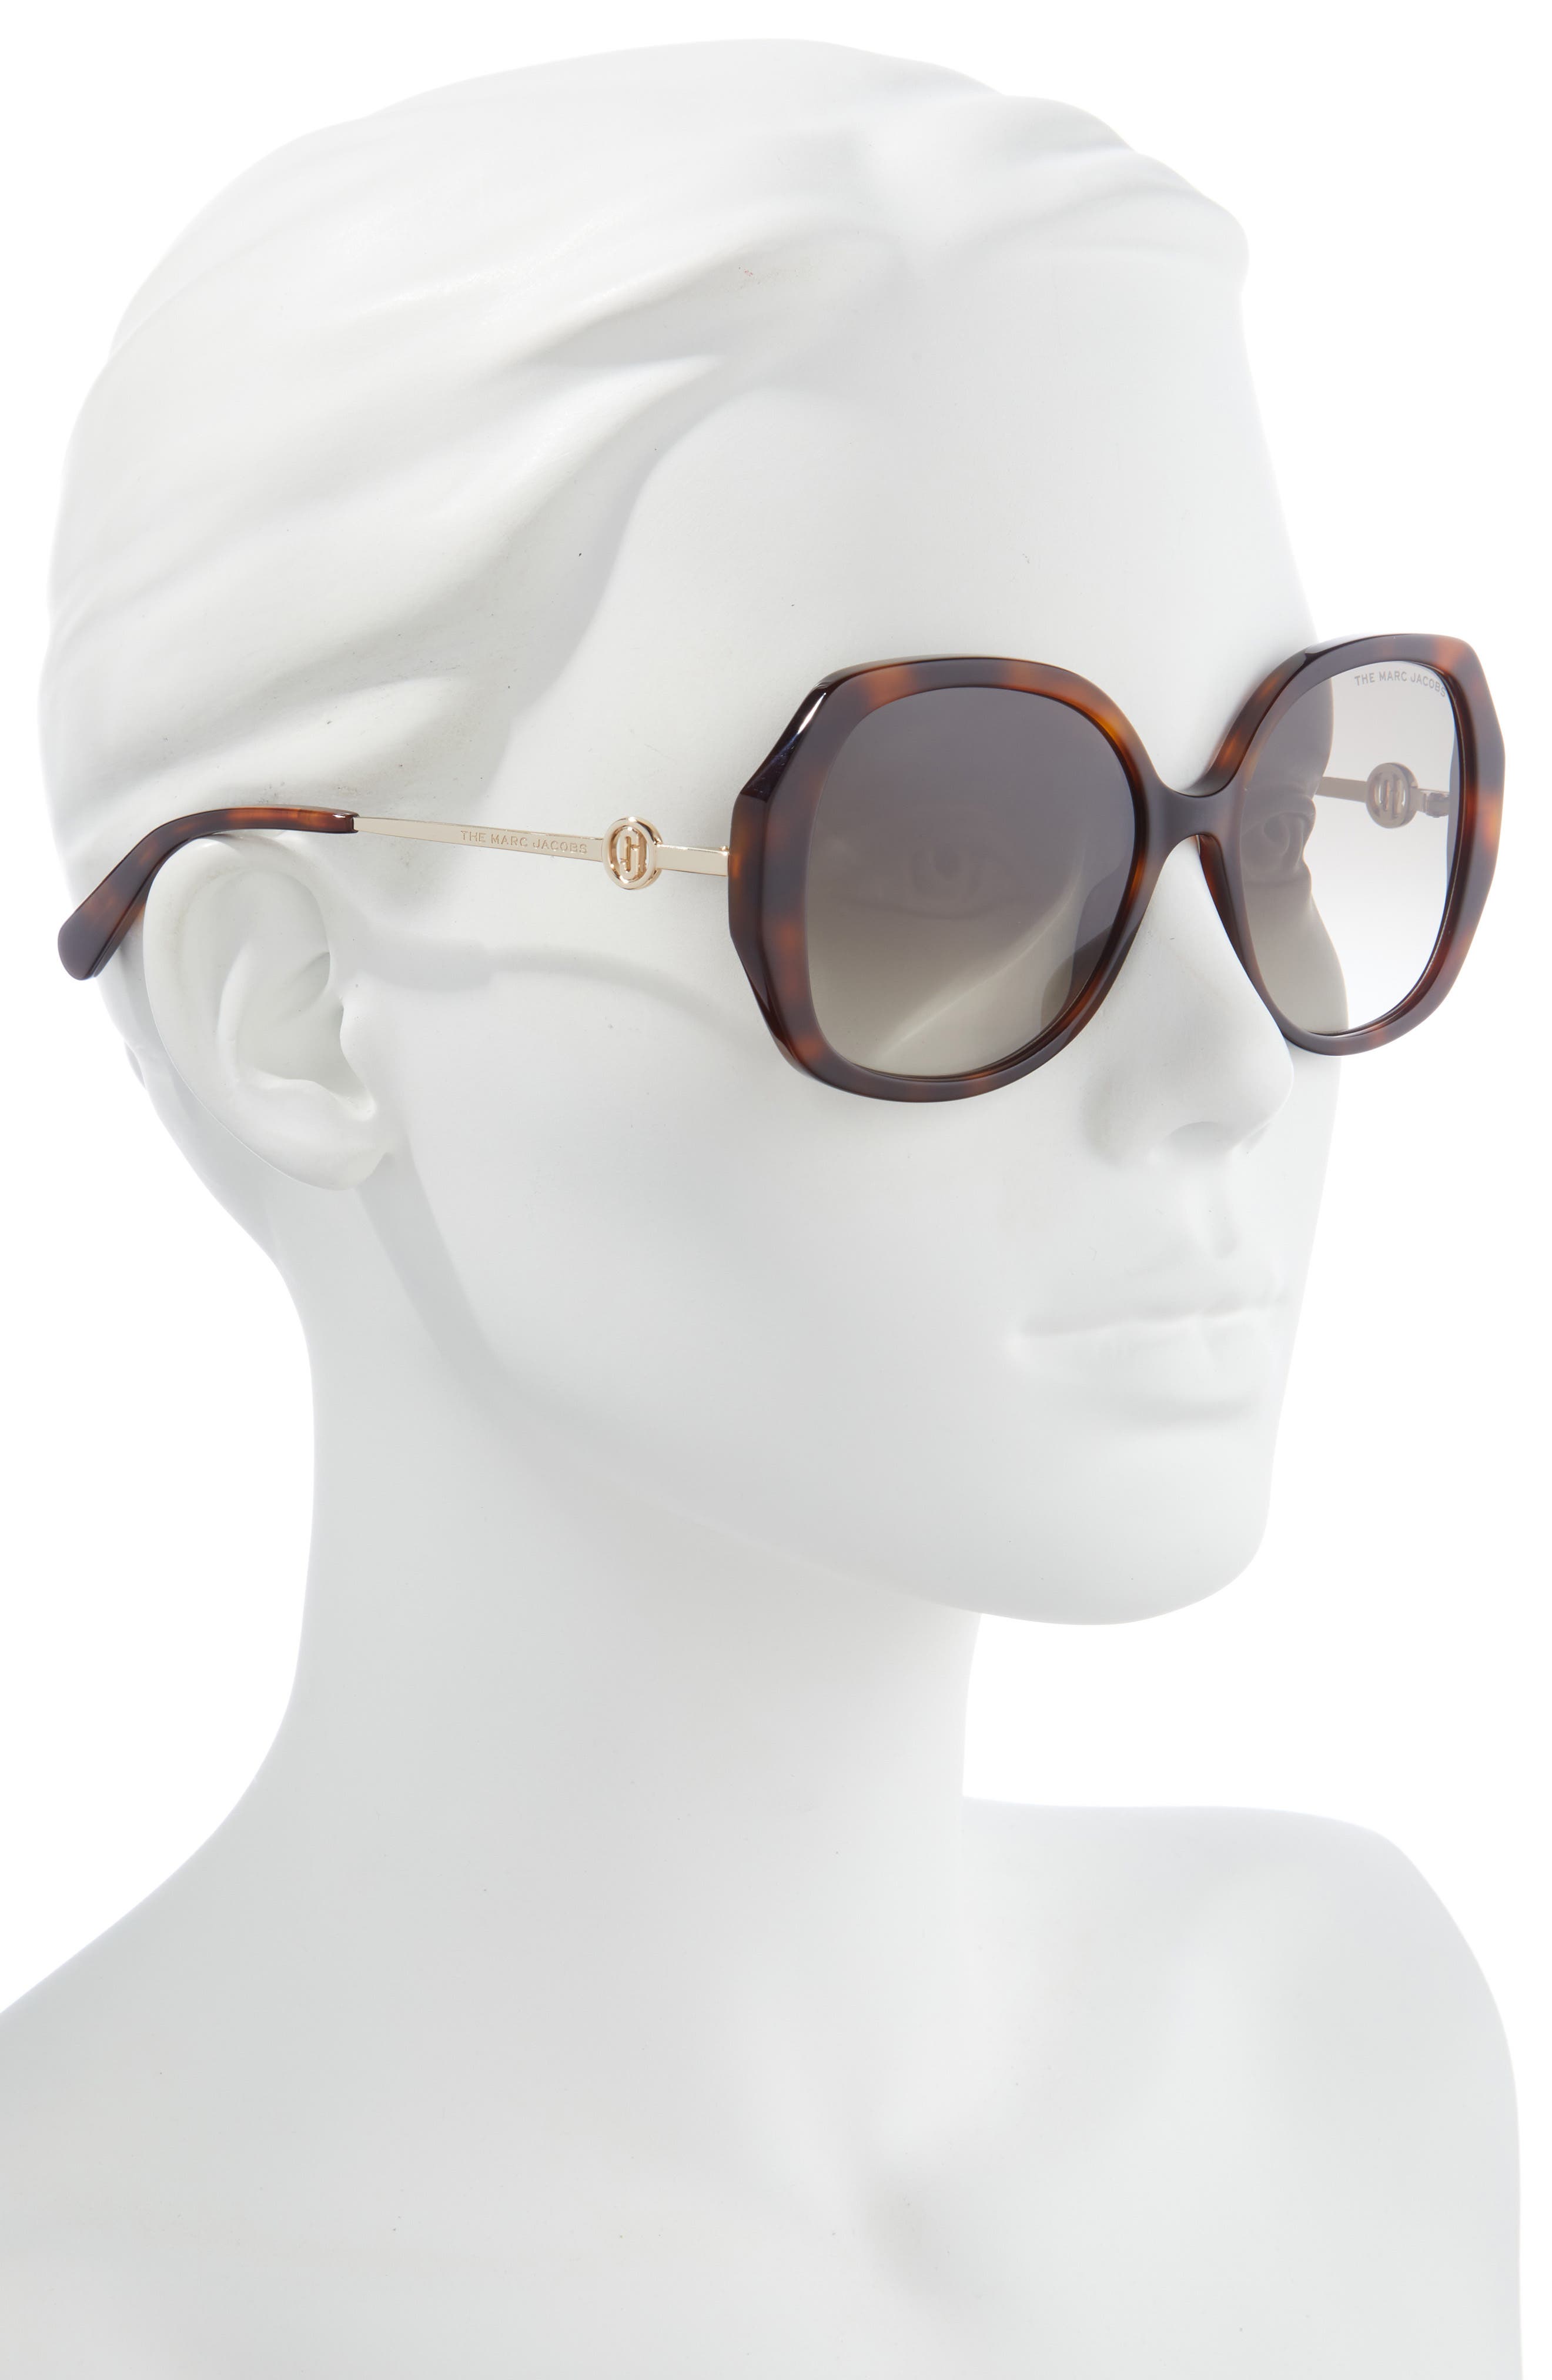 Ladies Designer's Sunglasses DE91 Black & Yellow Frame 100% UV Protection 